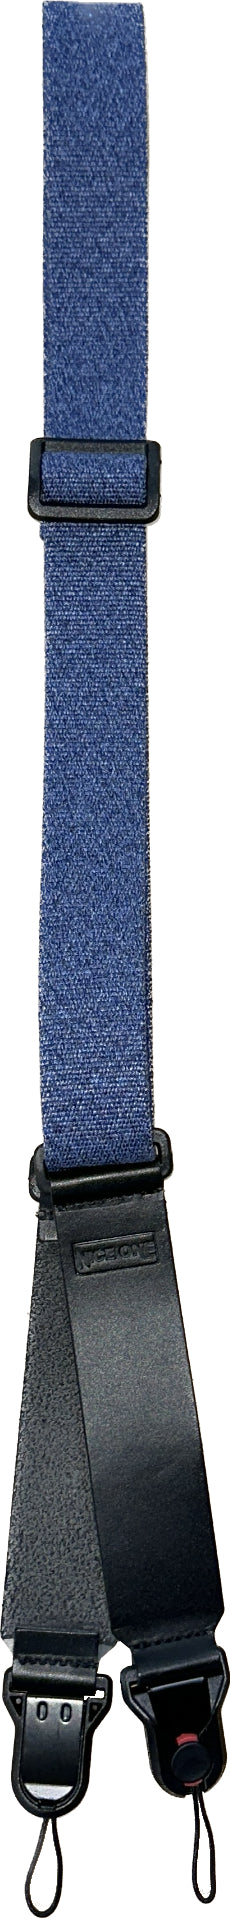 Nice One Tracolla Singola per Mirrorless in Tessuto Blu Jeans e Cuoio